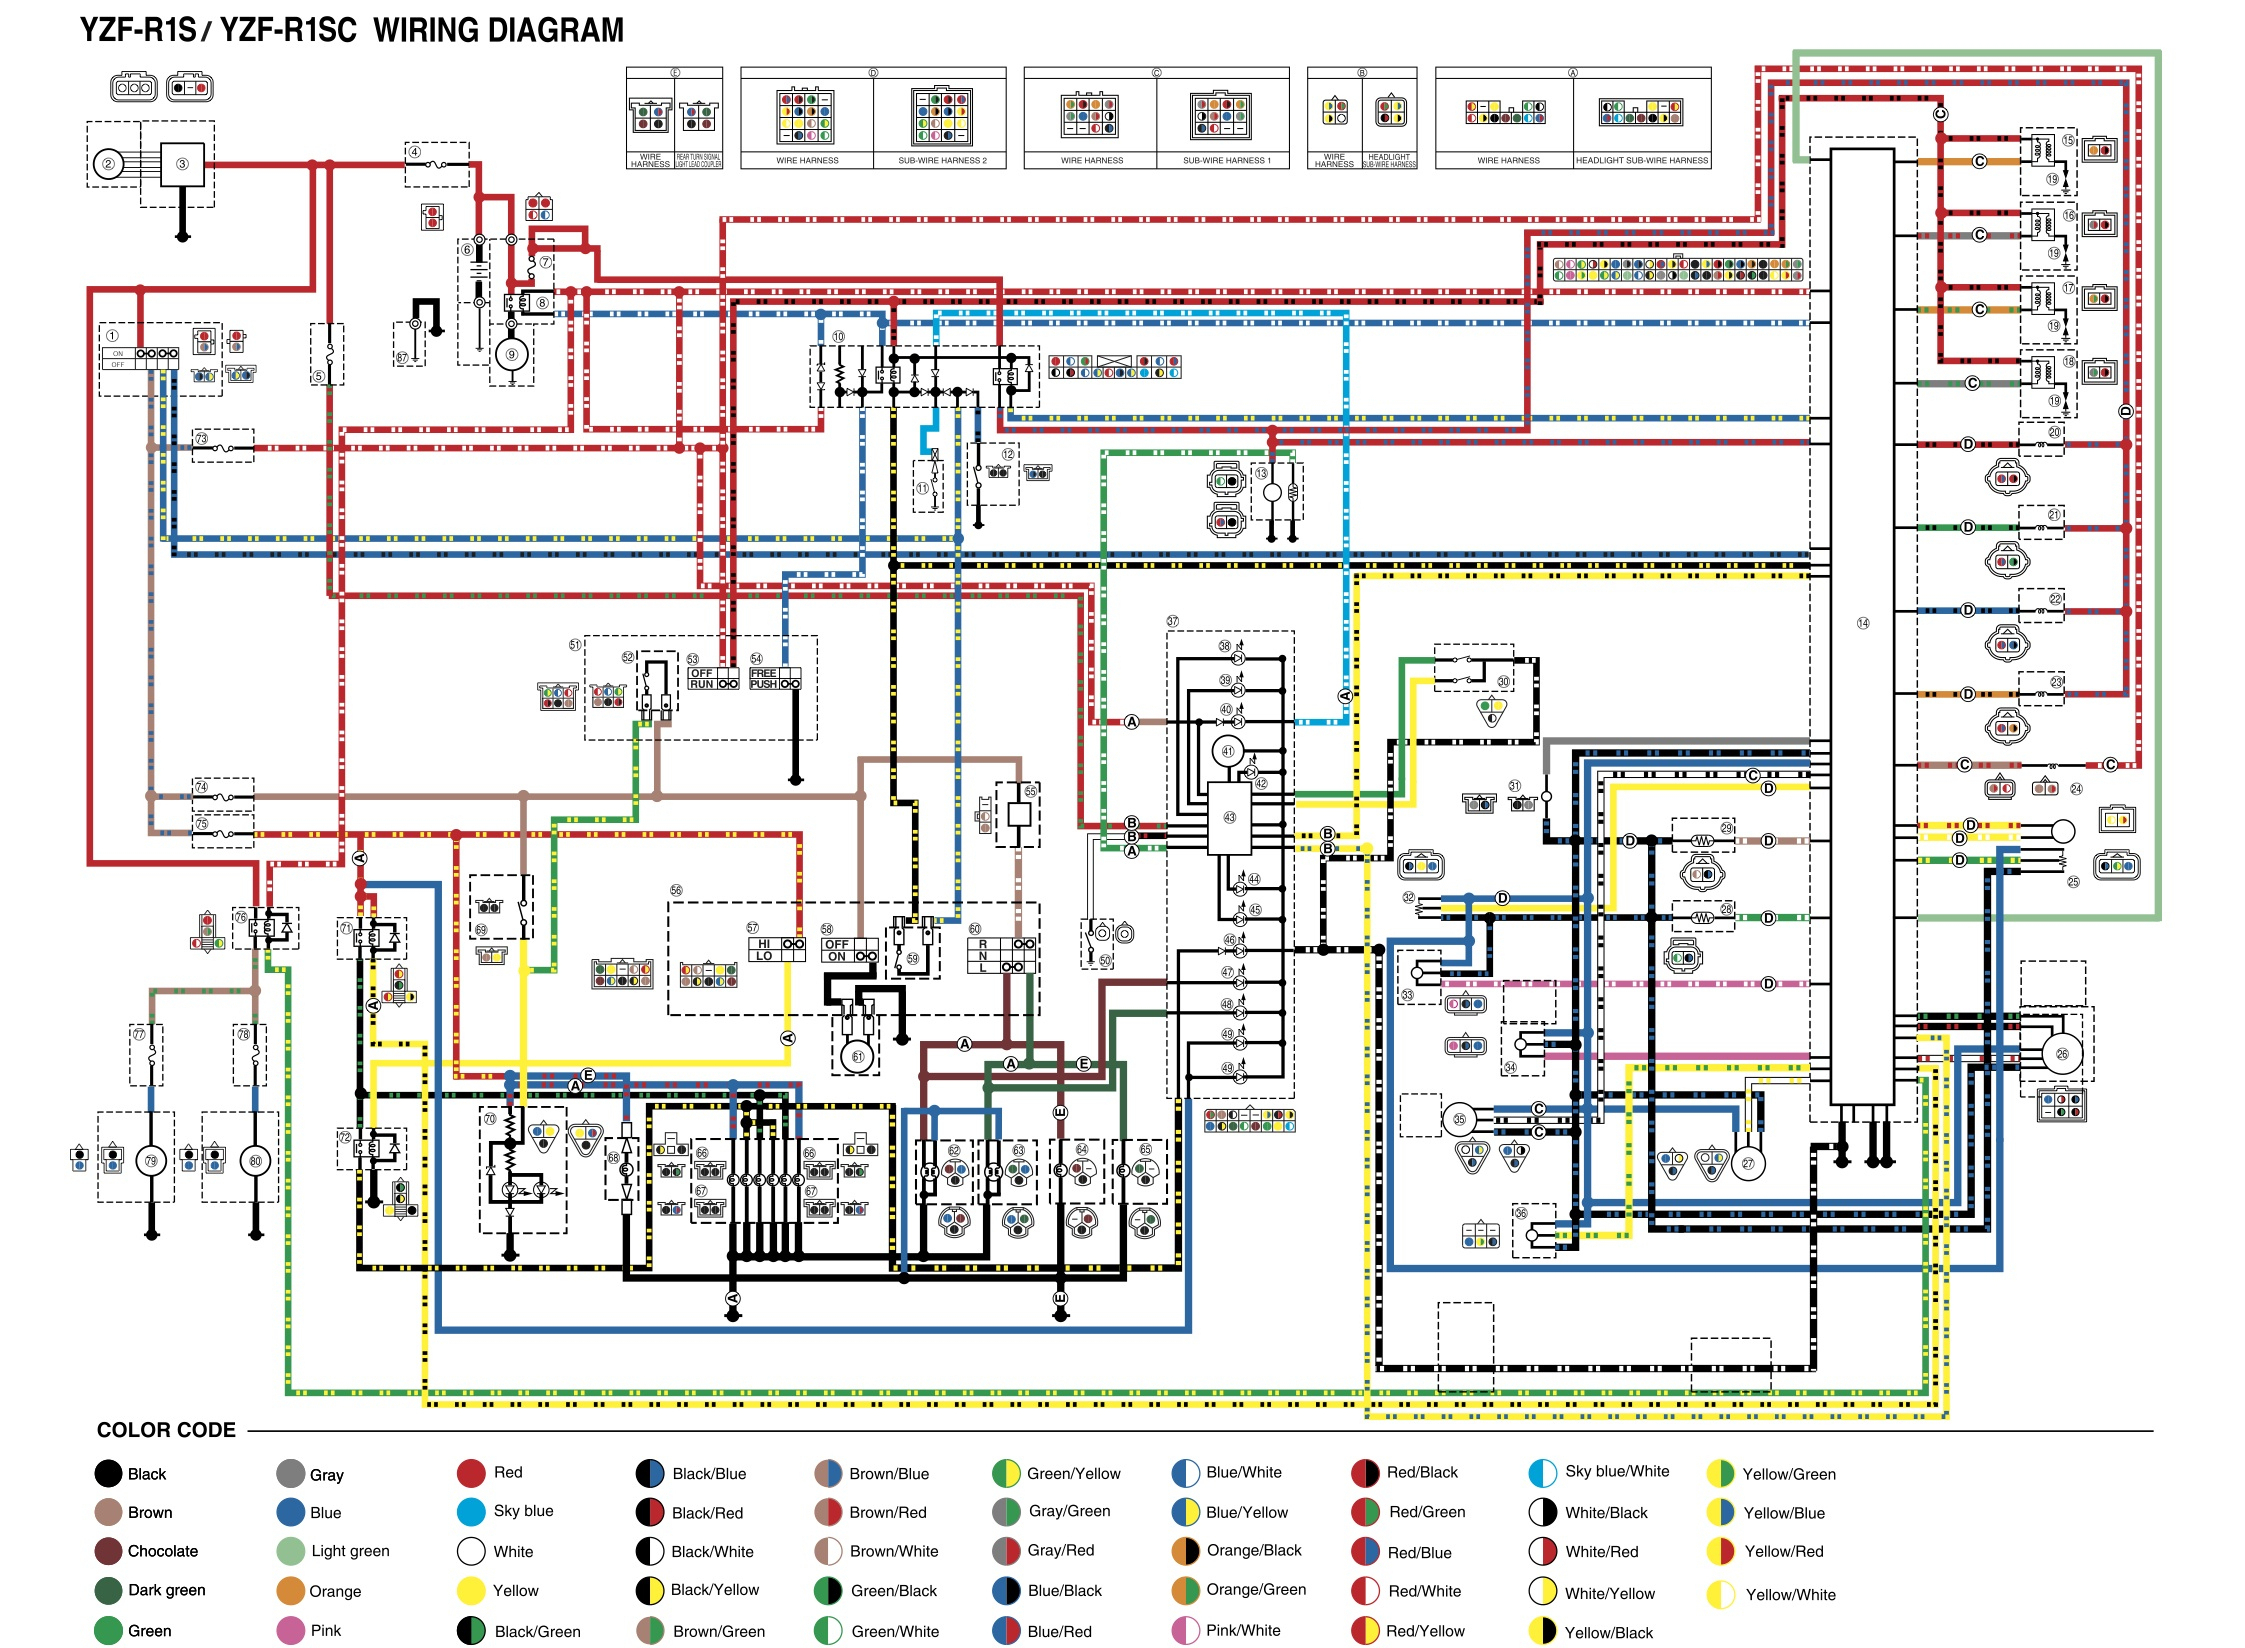 Buggy Wiring Diagram | Wiring Library - Bad Boy Wiring Diagram